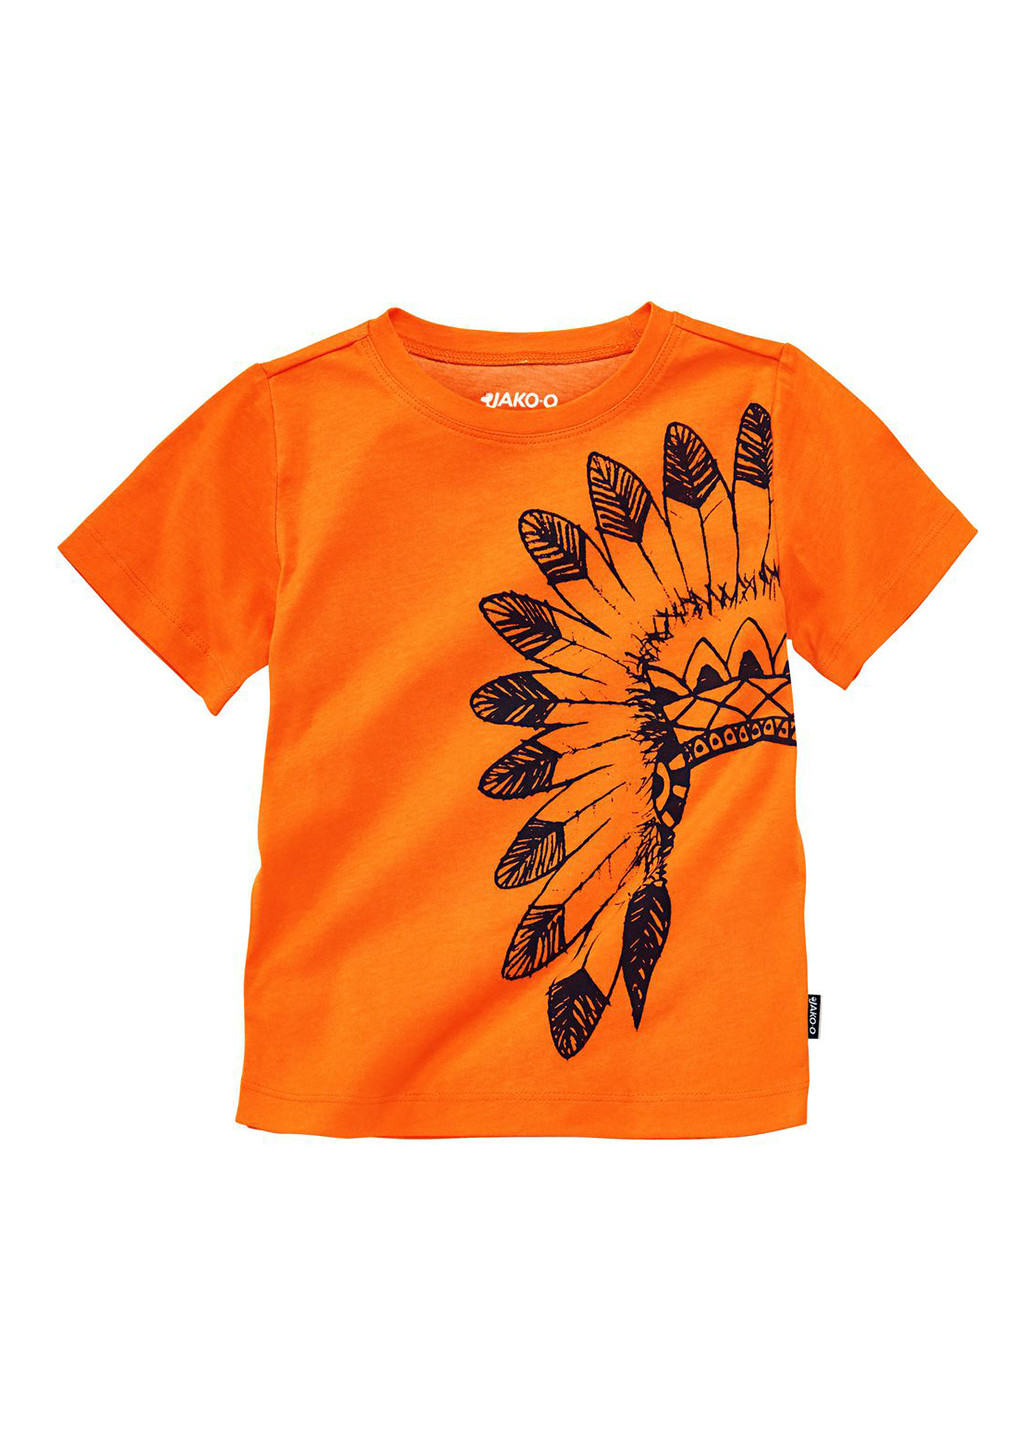 Оранжевая летняя футболка с коротким рукавом Jako-O